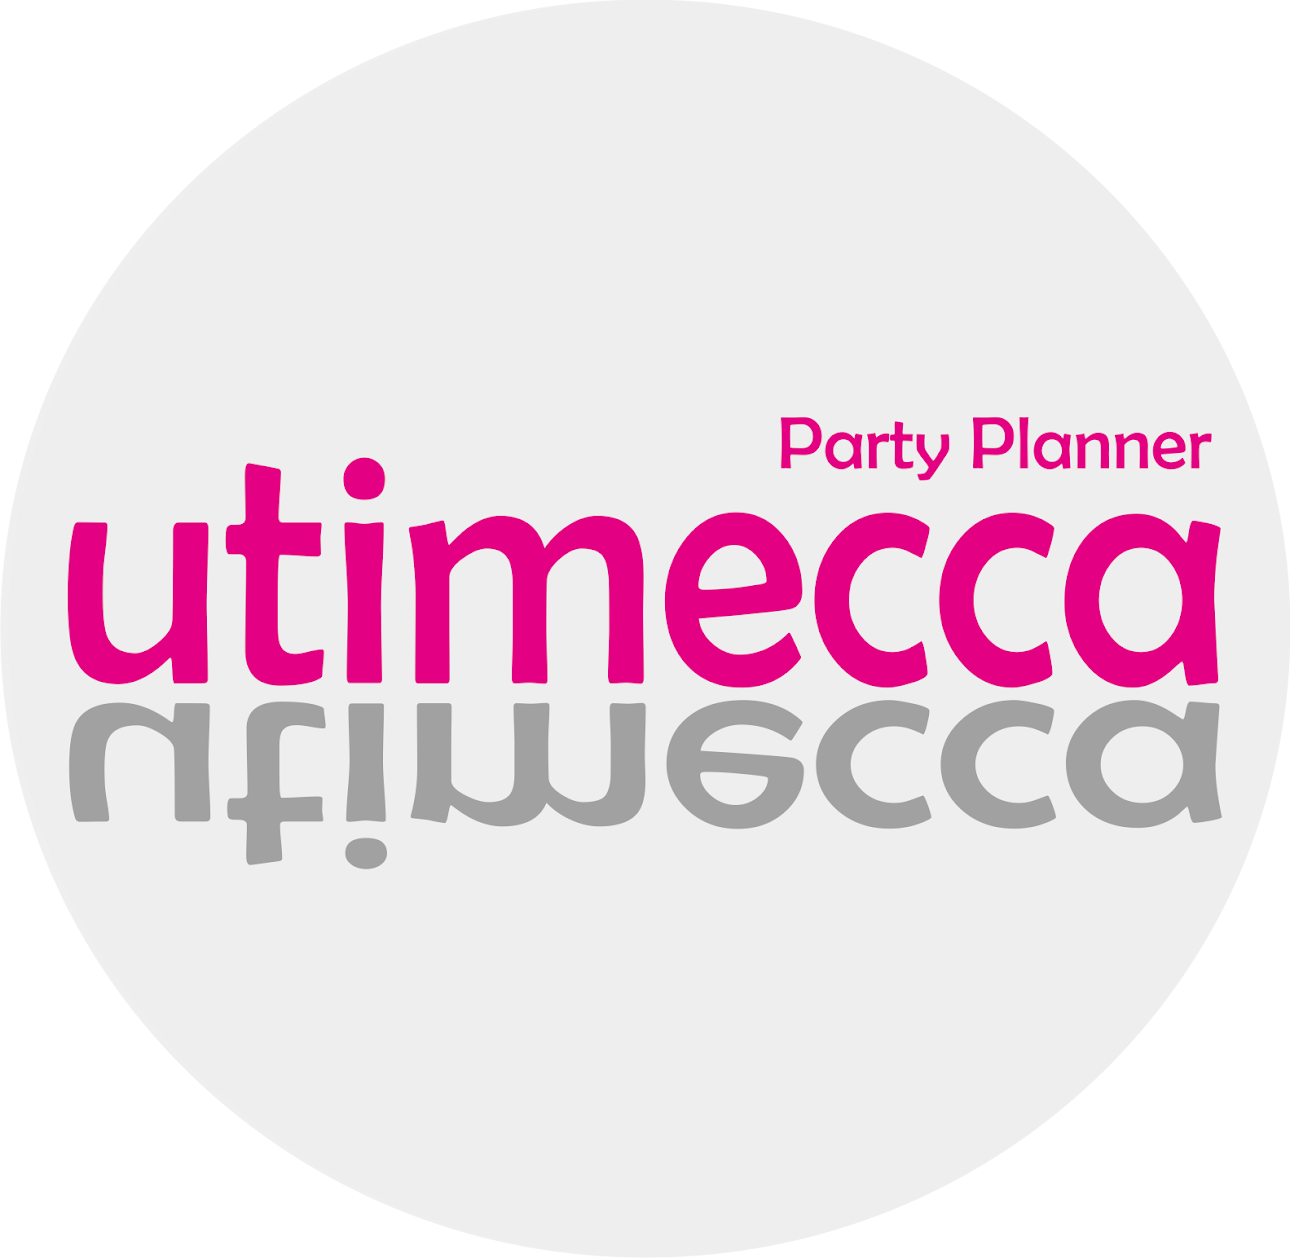 utimecca party planner